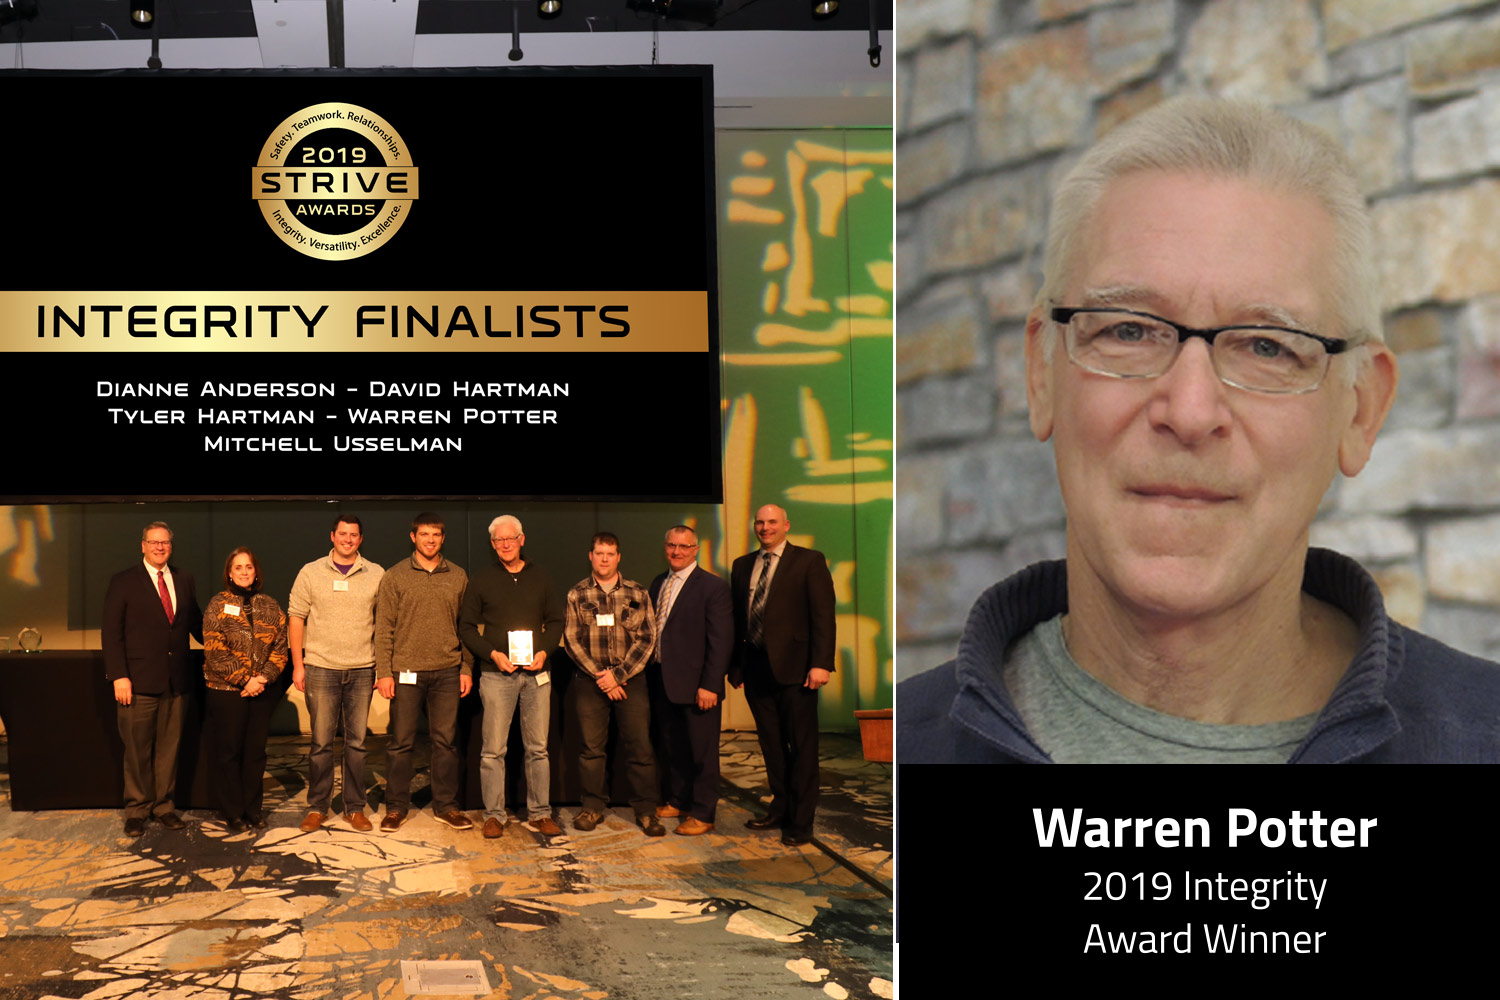 Warren Potter, 2019 Integrity Award Winner